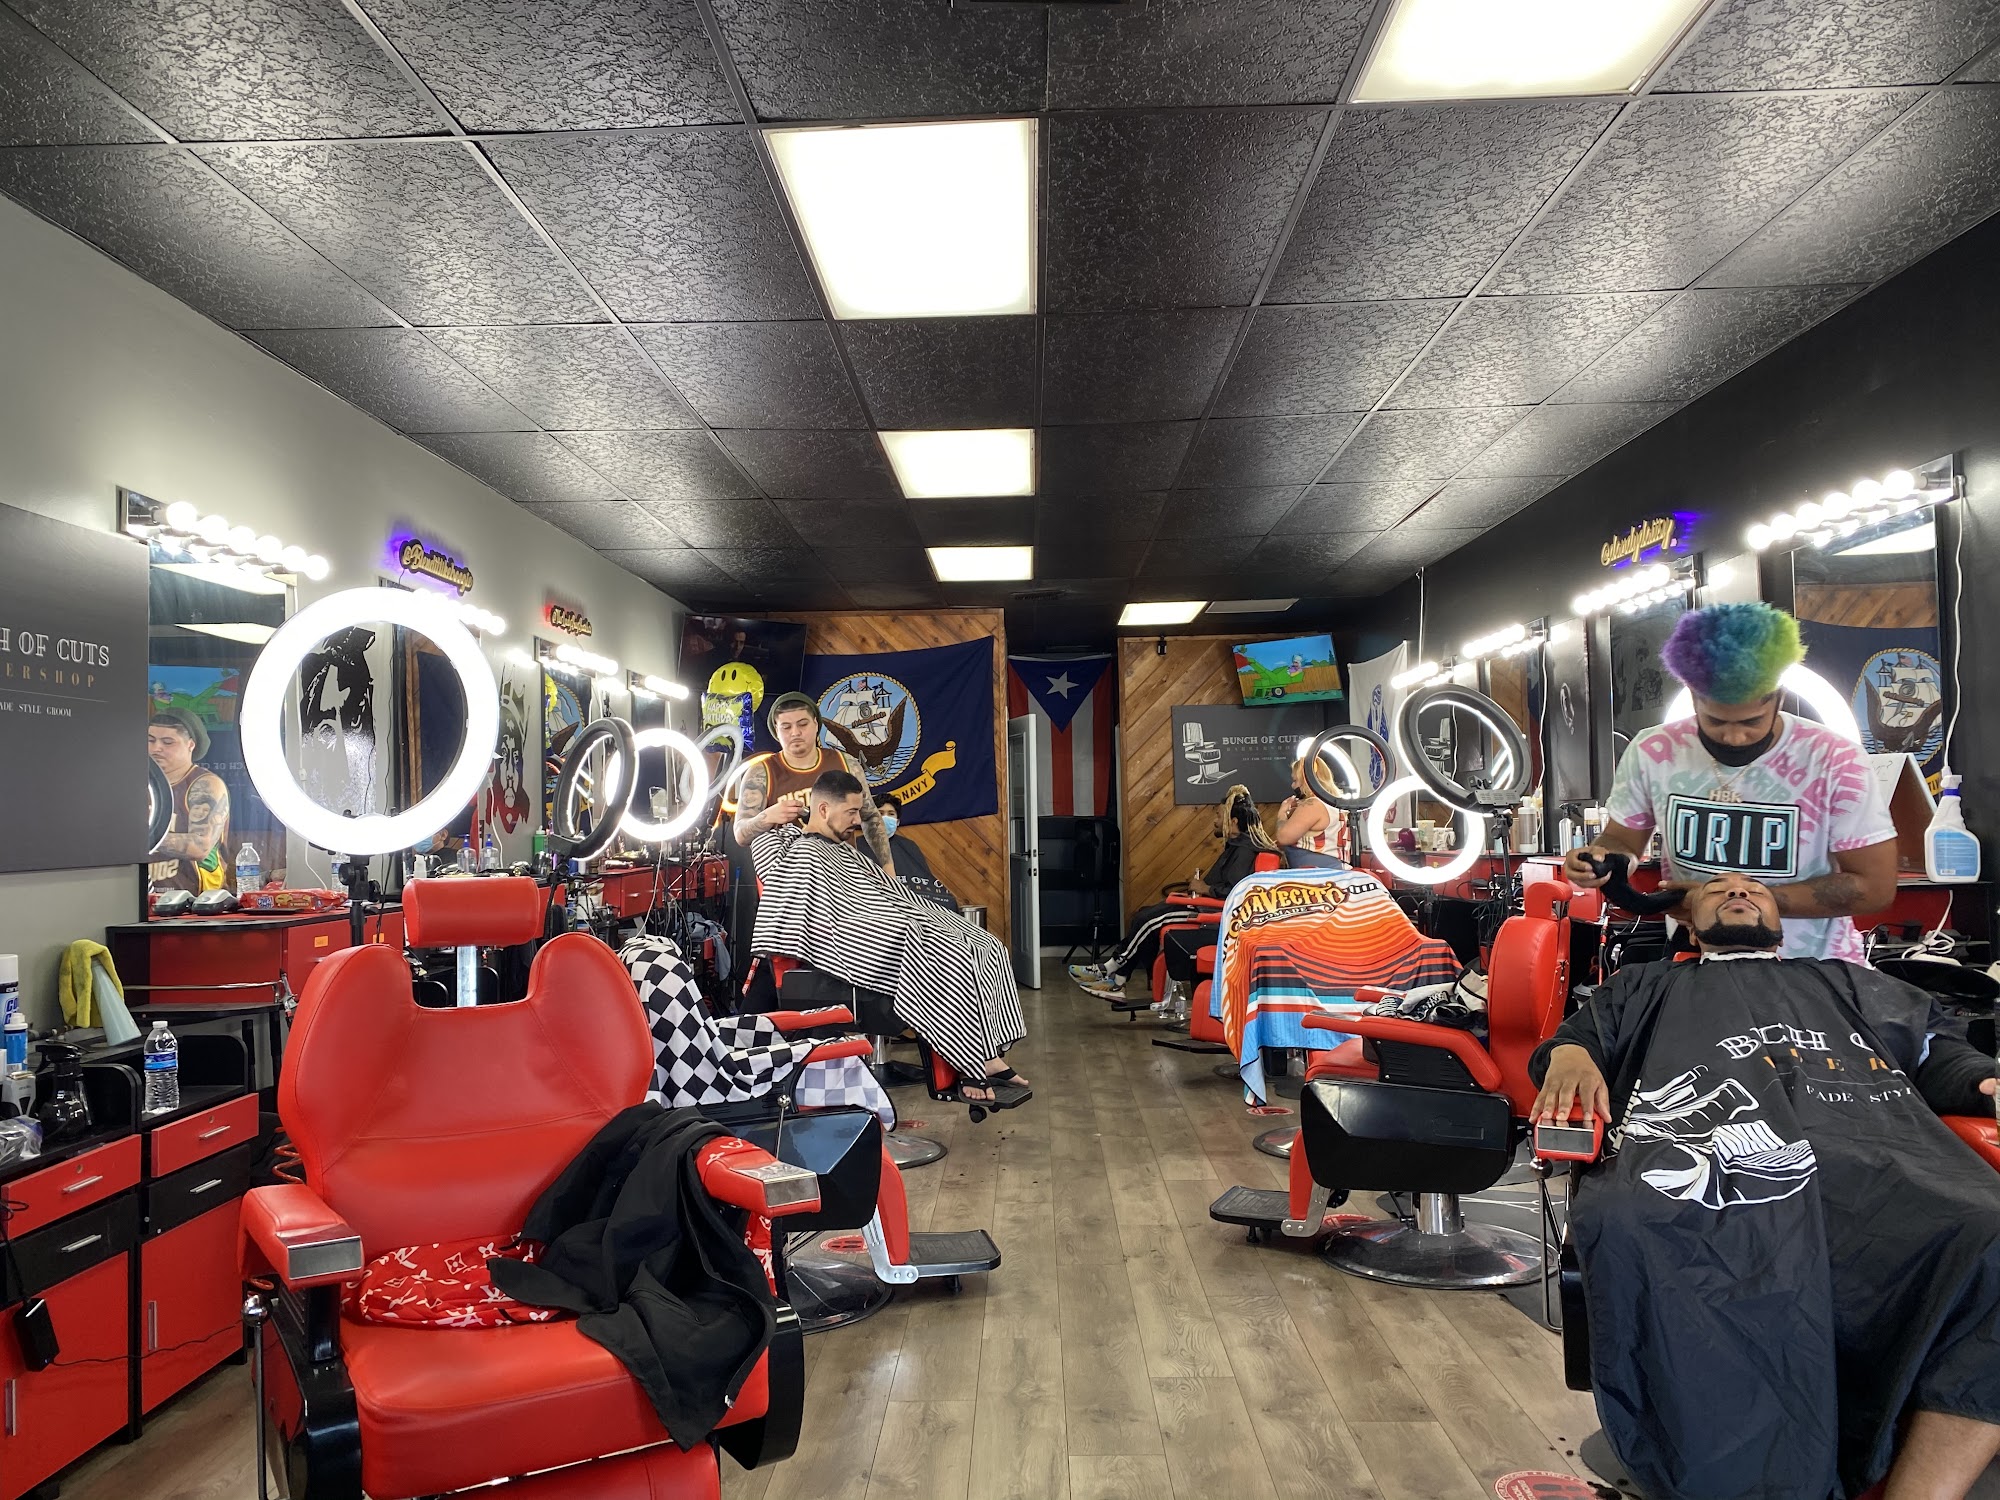 Bunch of Cuts Barber Shop